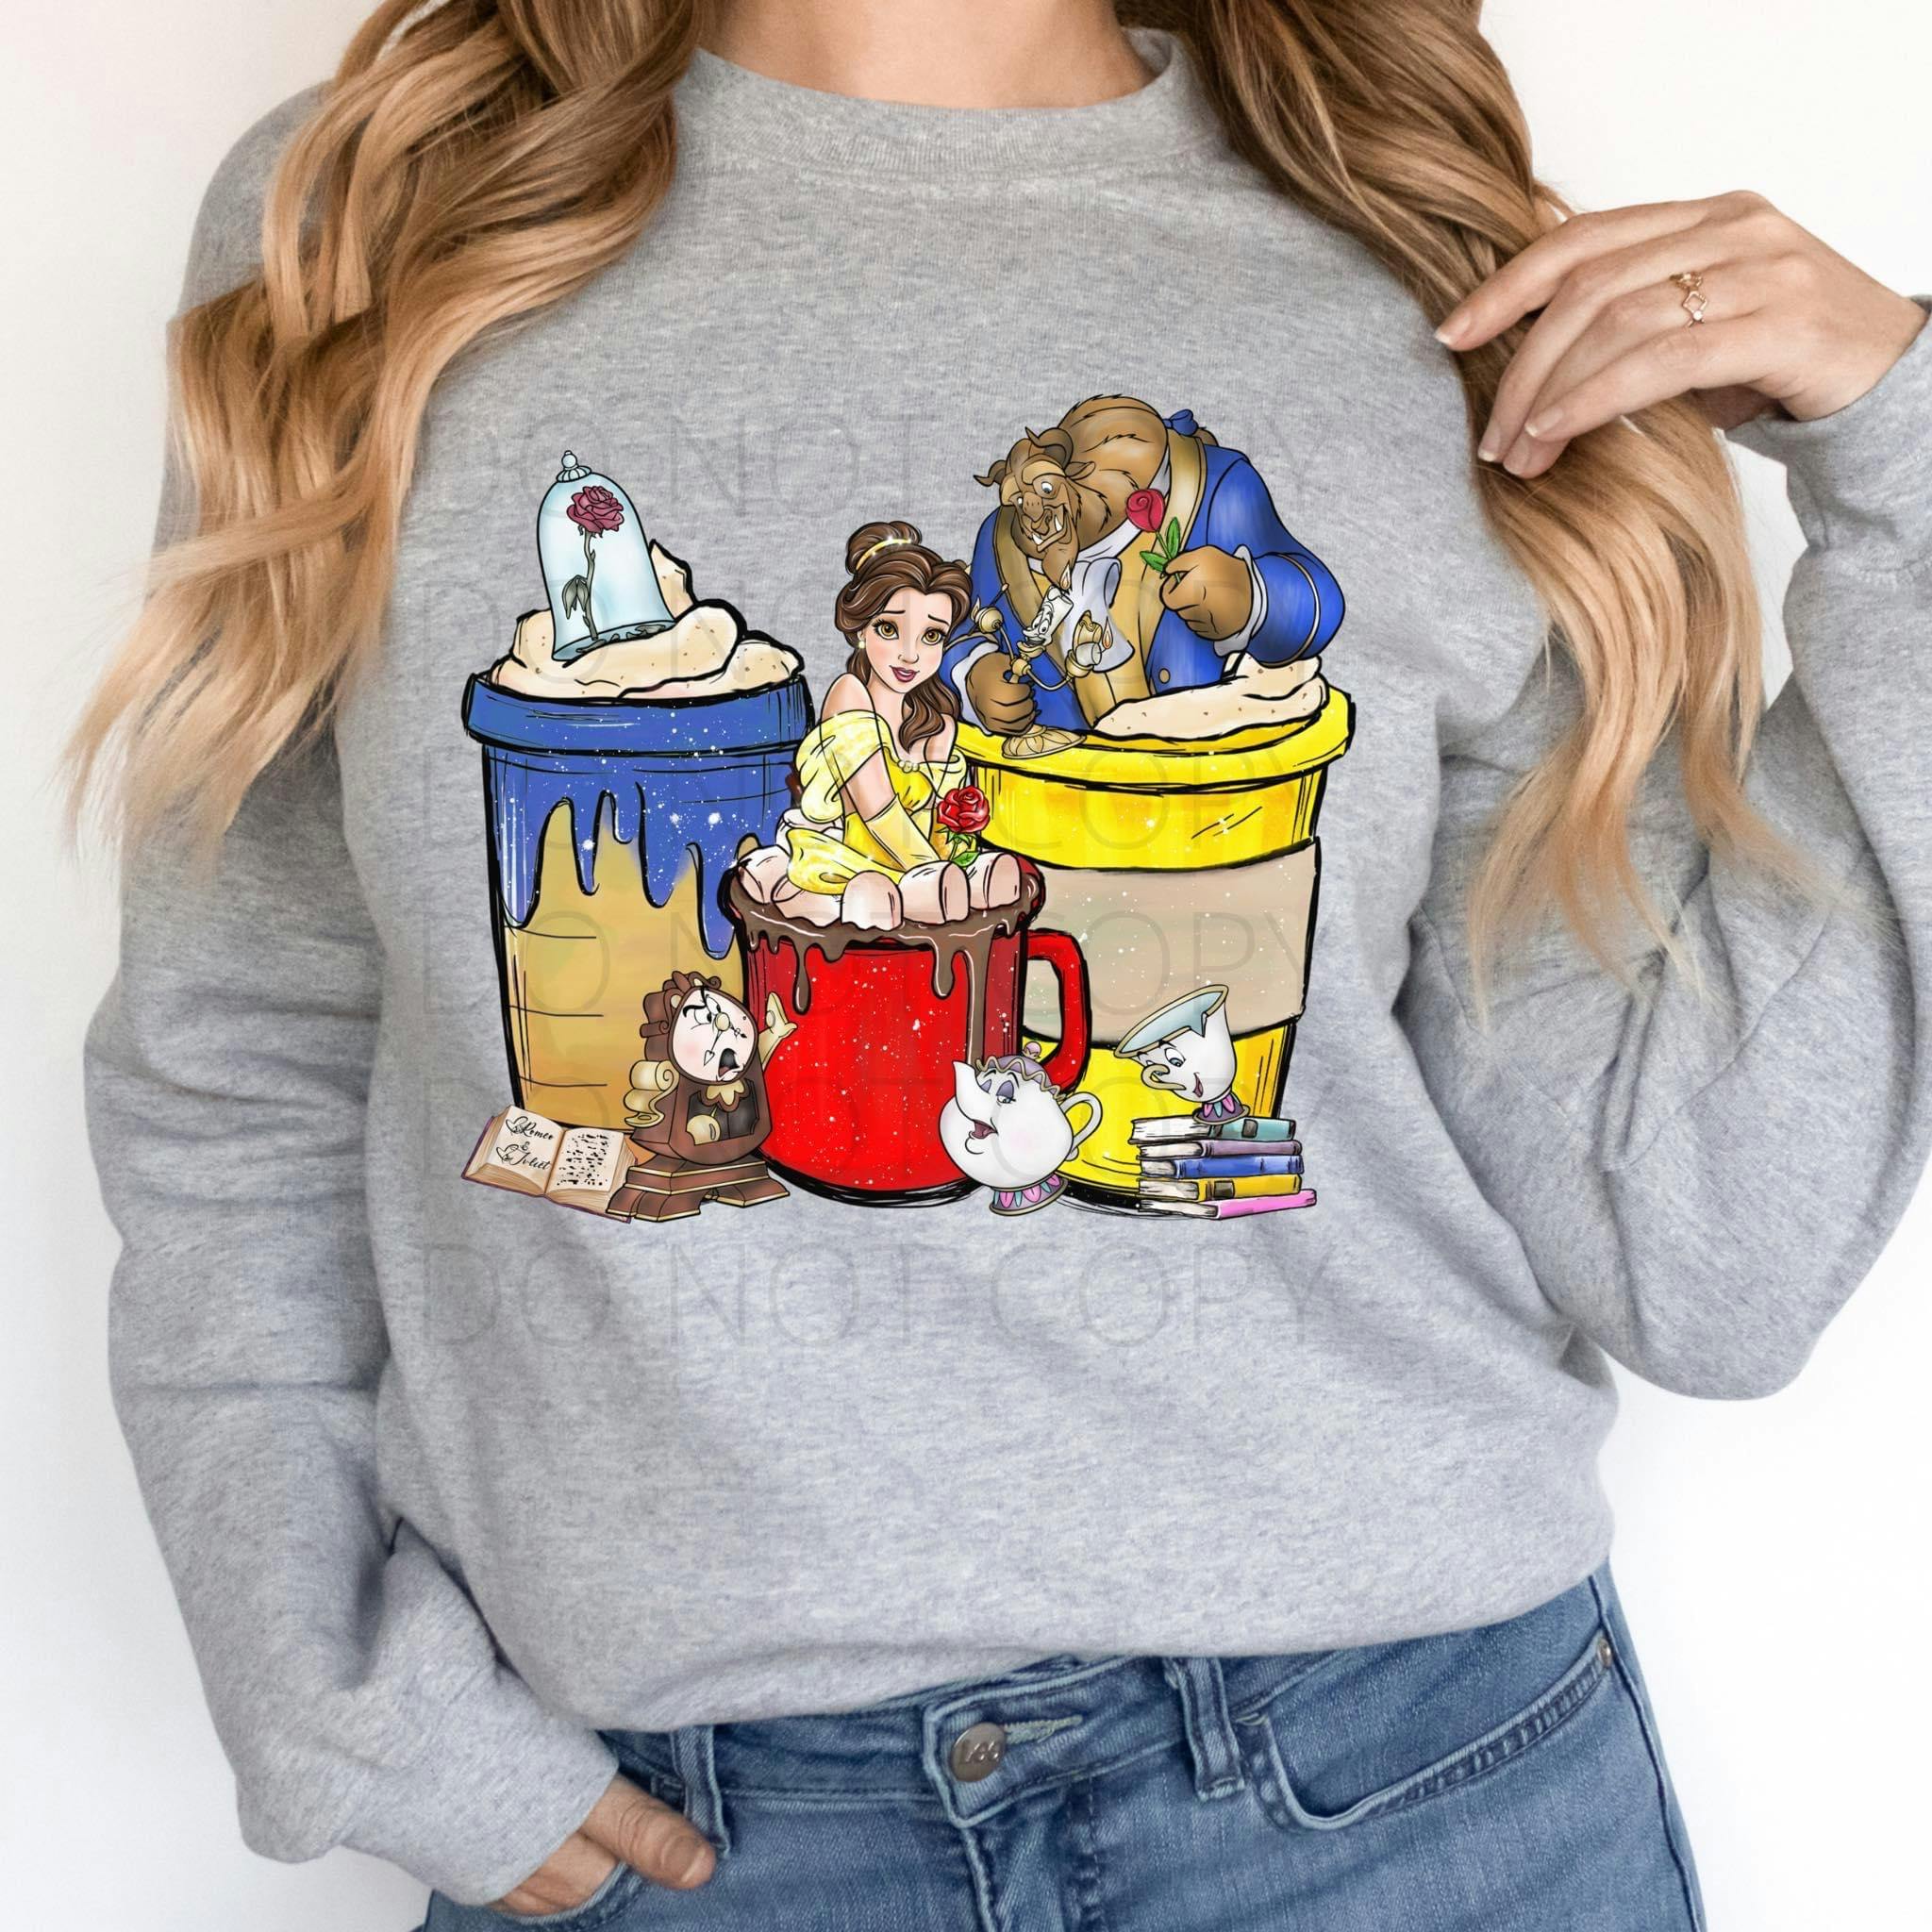 Disney Inspired Shirts 